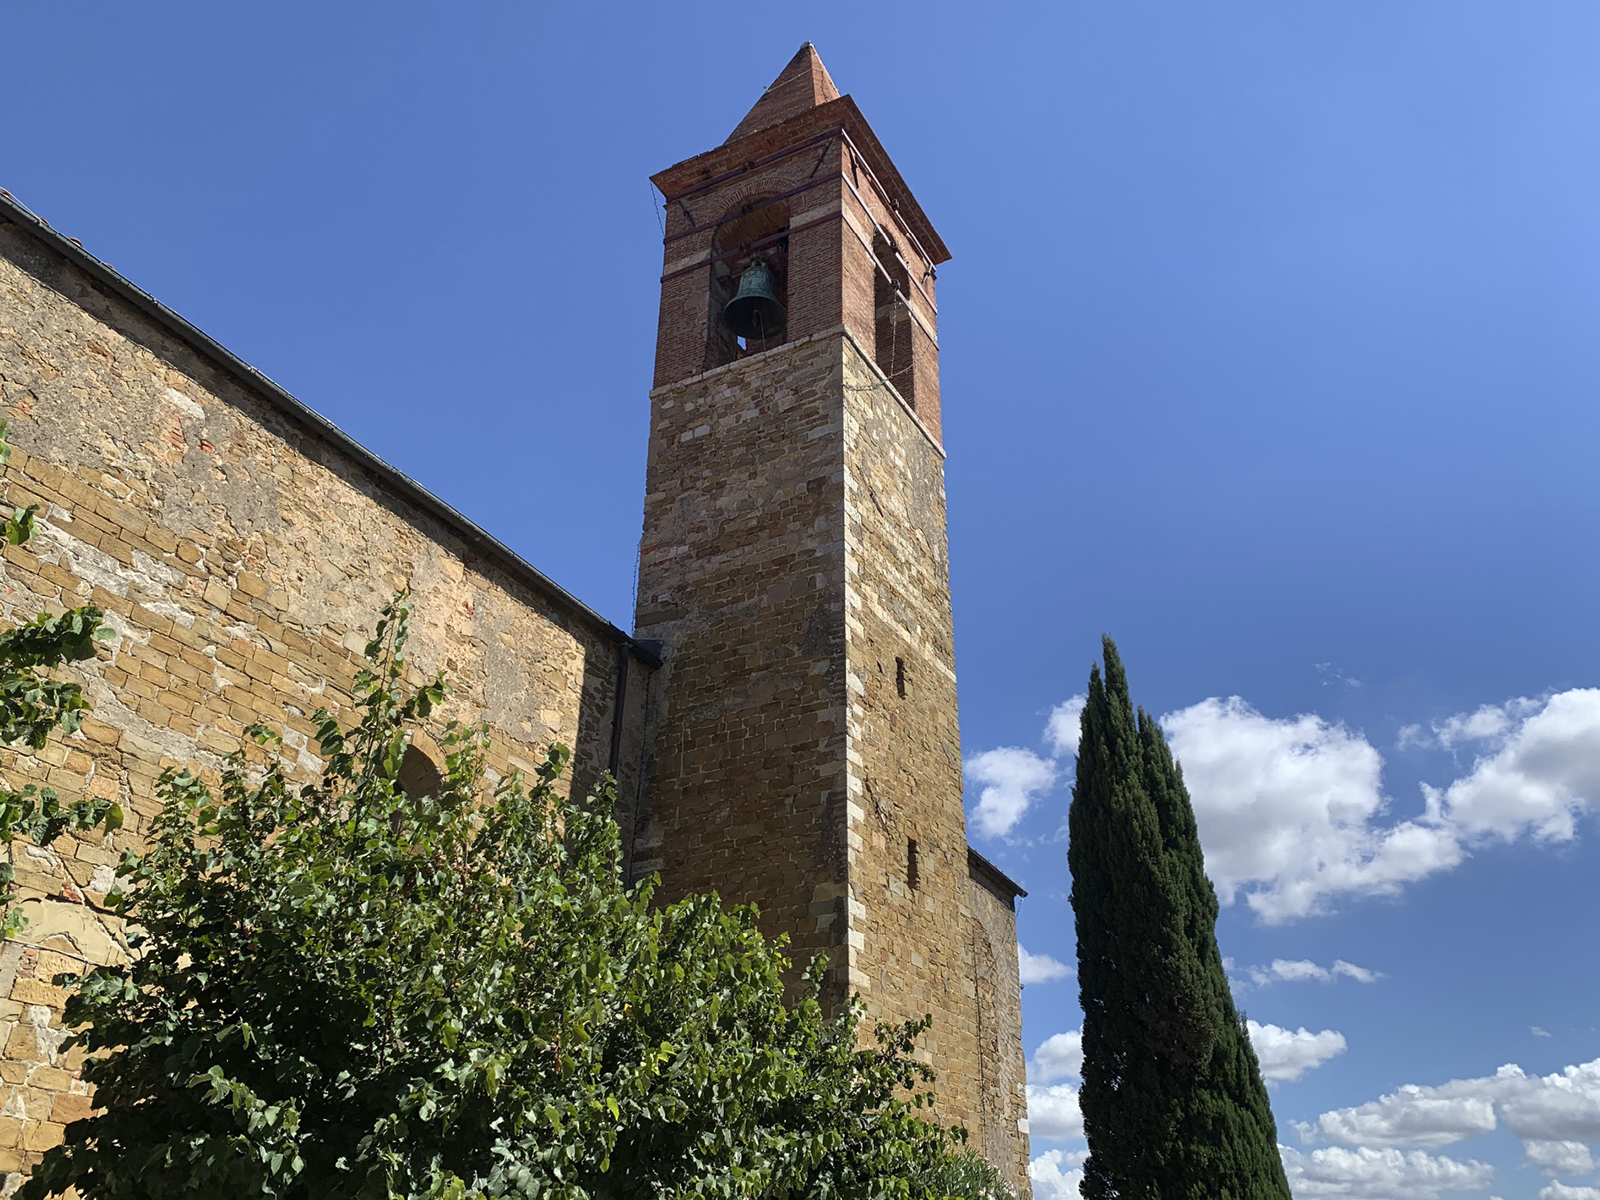 The Church of San Donato